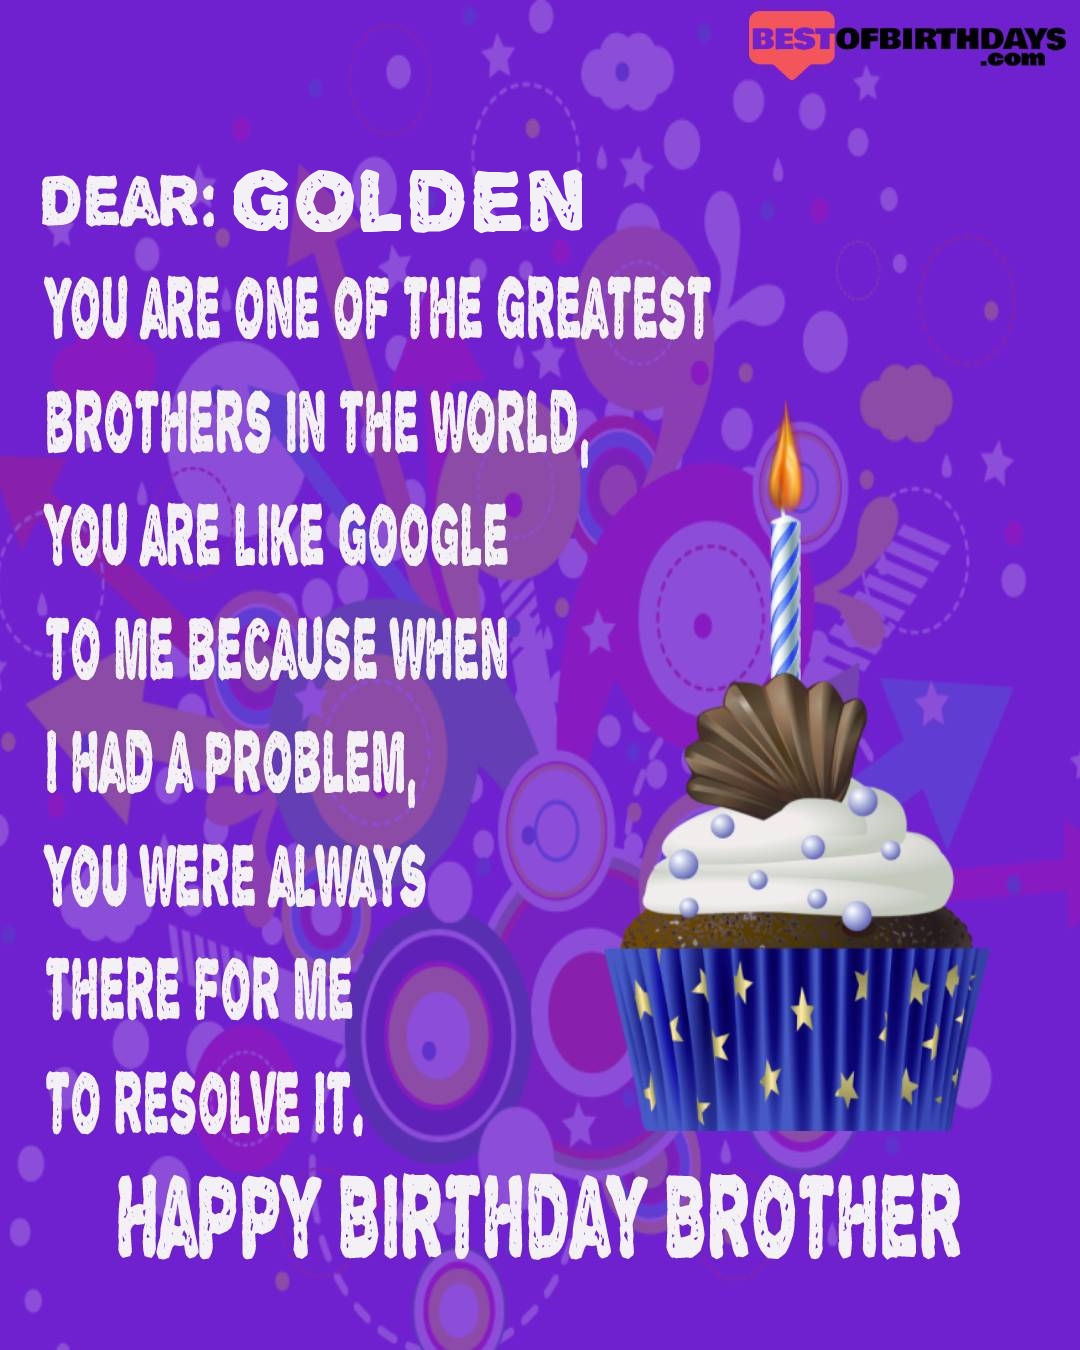 Happy birthday golden bhai brother bro